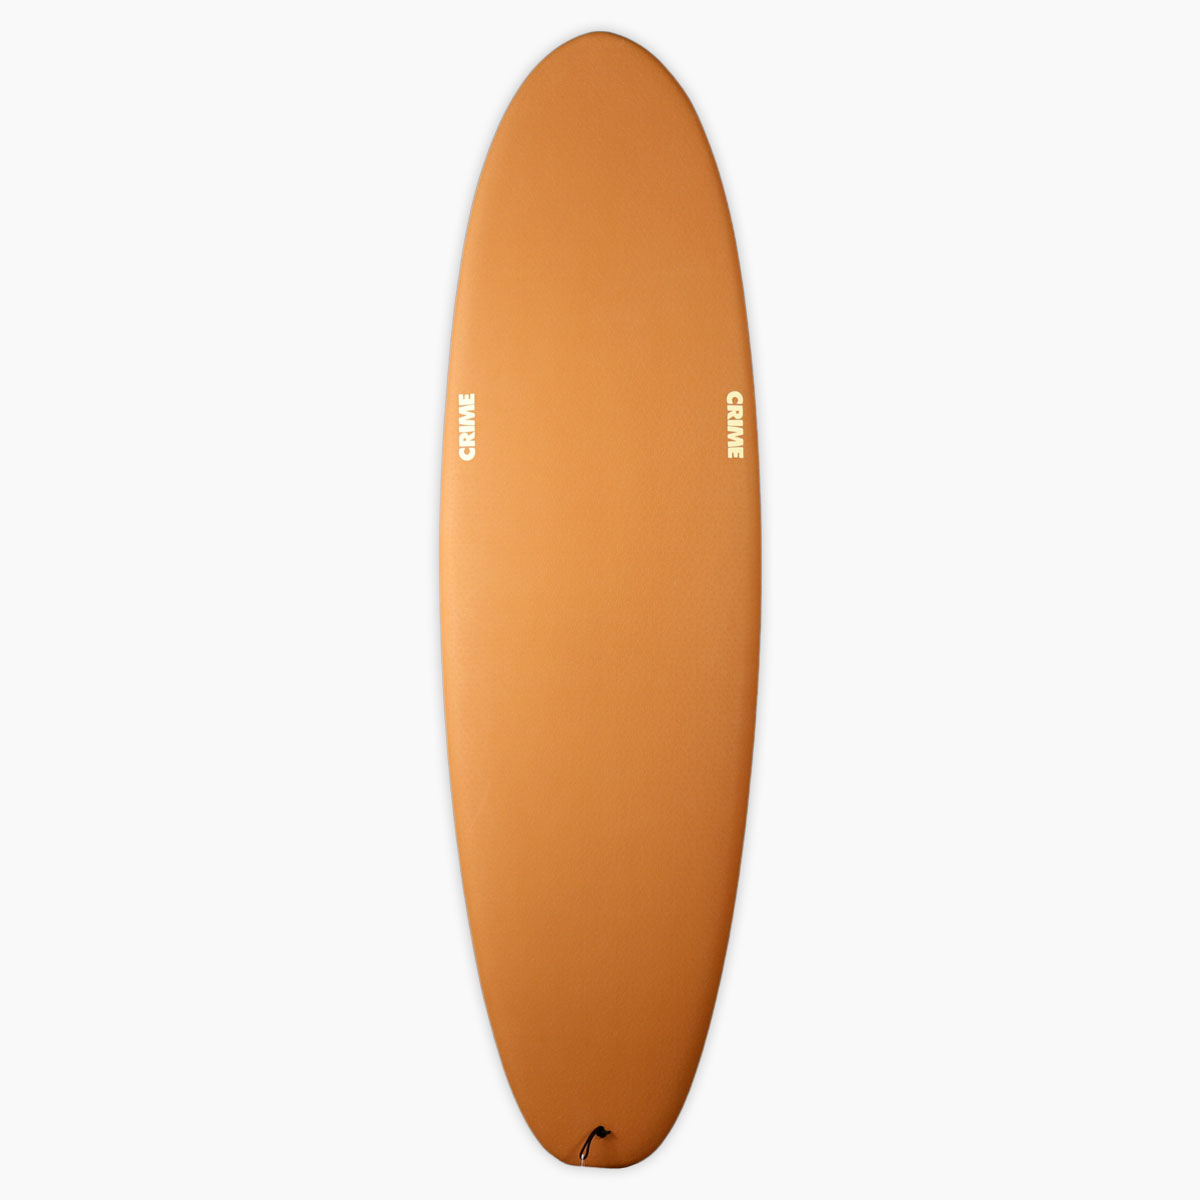 SurfBoardNet / サーフボード ブランド:CHRISTENSON SURFBOARDS